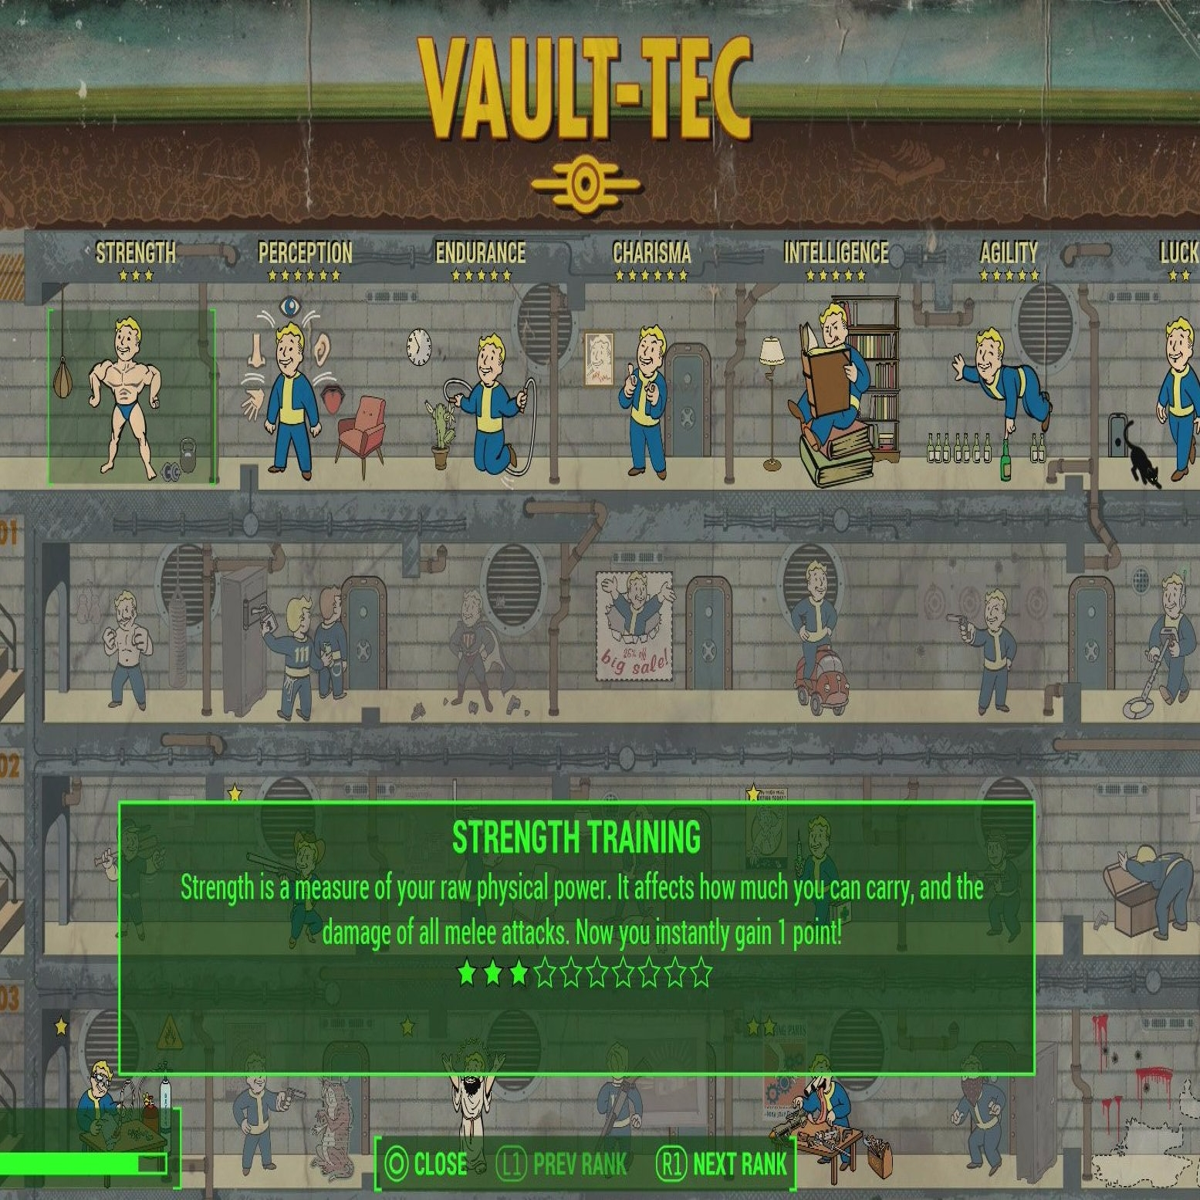 Commissie Wereldrecord Guinness Book distillatie Fallout 4 - Perks tips: bouw een goed character | Eurogamer.nl